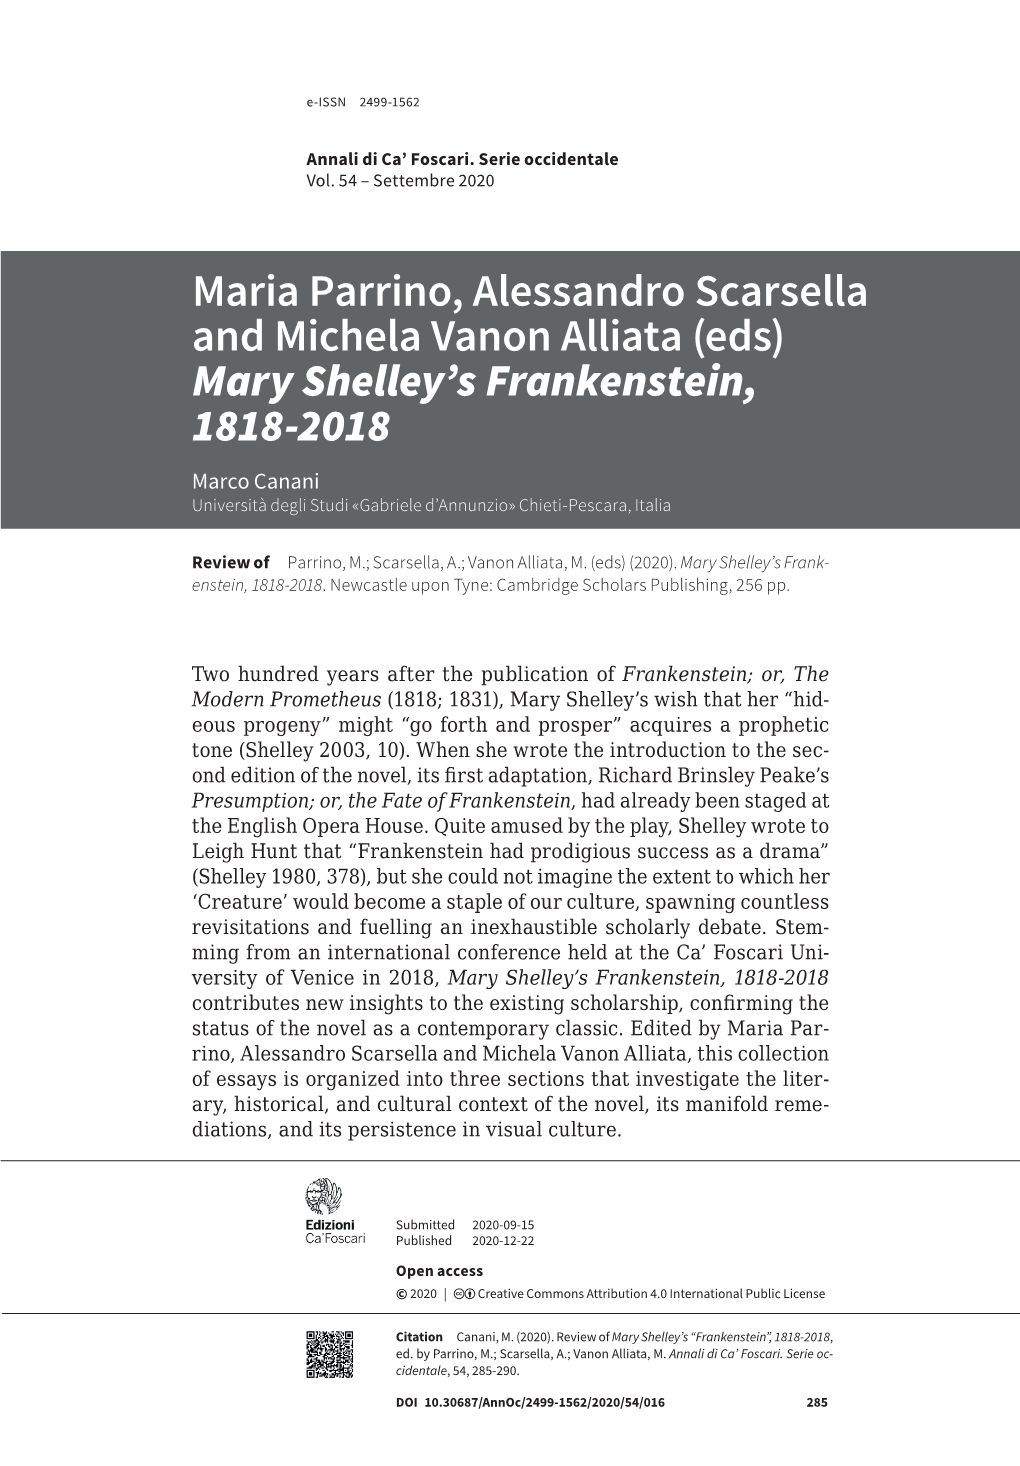 Maria Parrino, Alessandro Scarsella and Michela Vanon Alliata (Eds) Mary Shelley's Frankenstein, 1818-2018